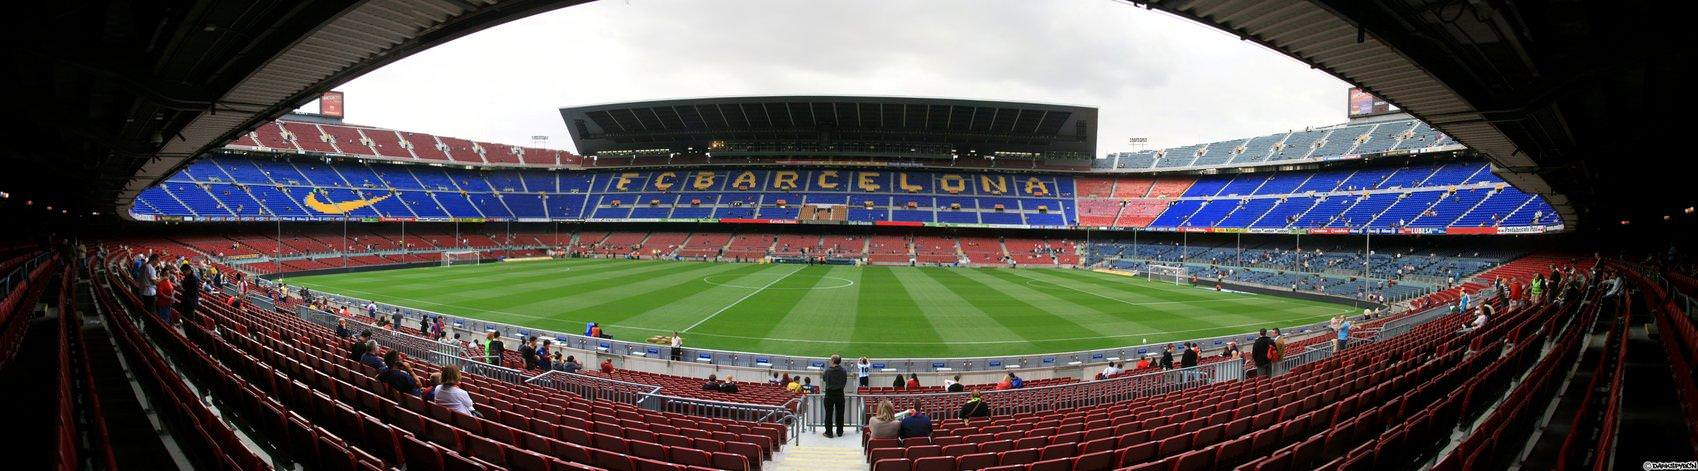 Immagine di Barcelona, style, and football